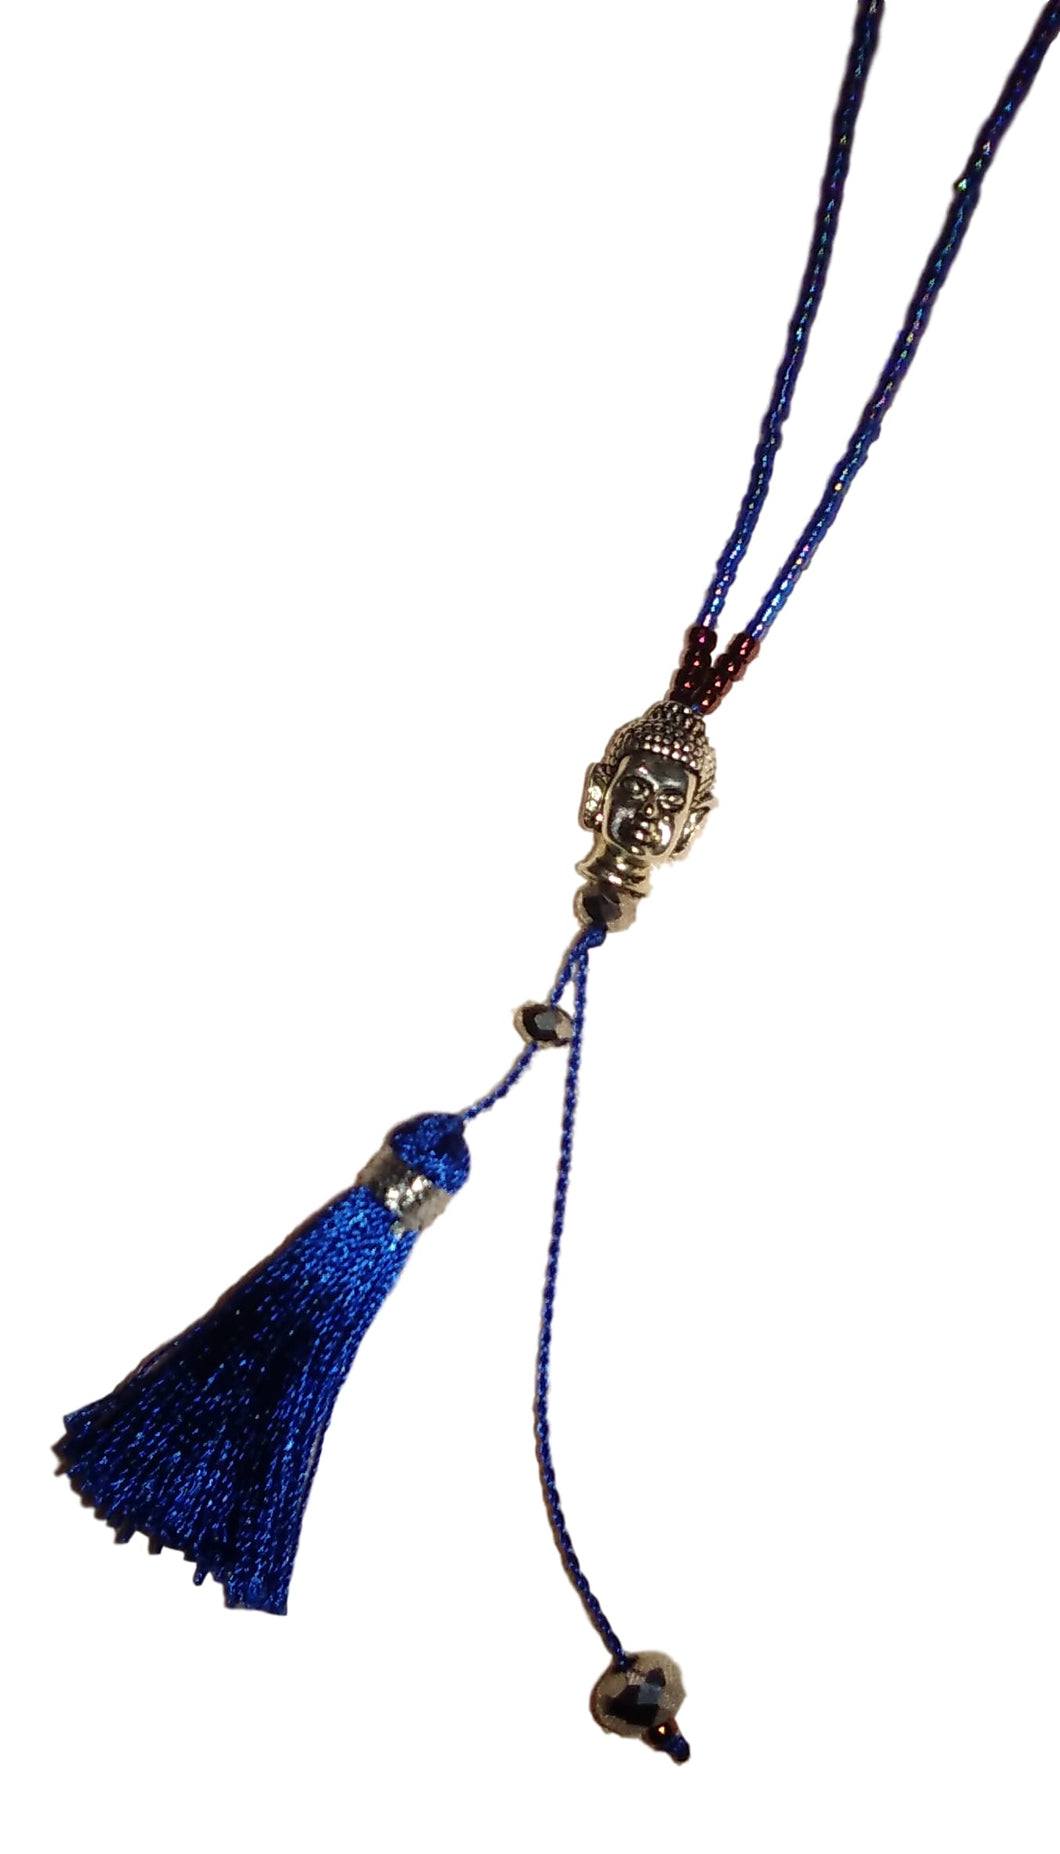 Jewelry - Mala Necklace with Buddha and small beads - Blue